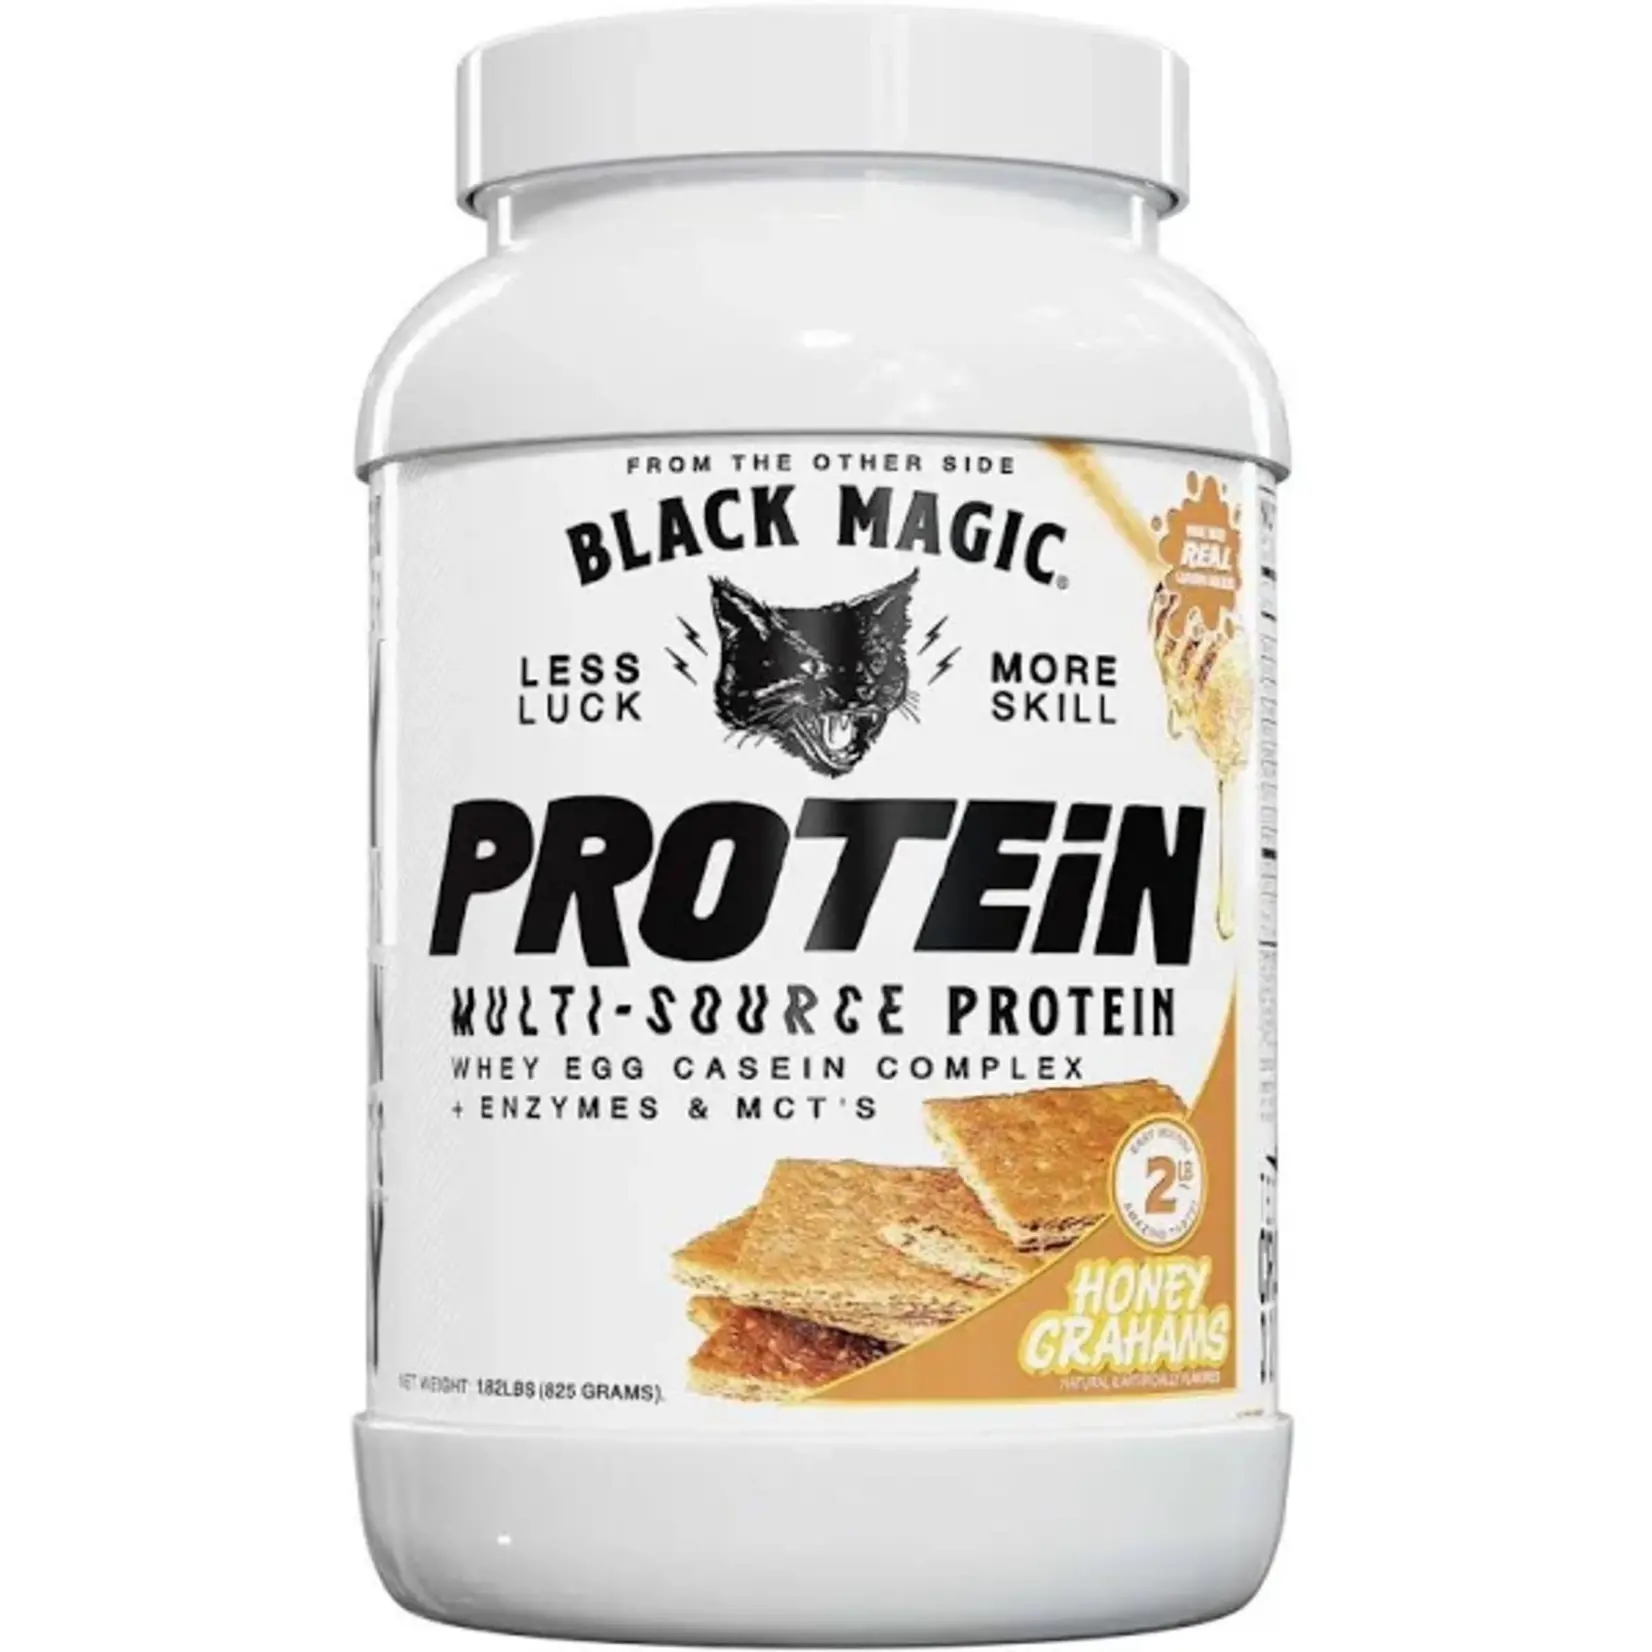 Black Magic Black Magic Multi-Source Protein